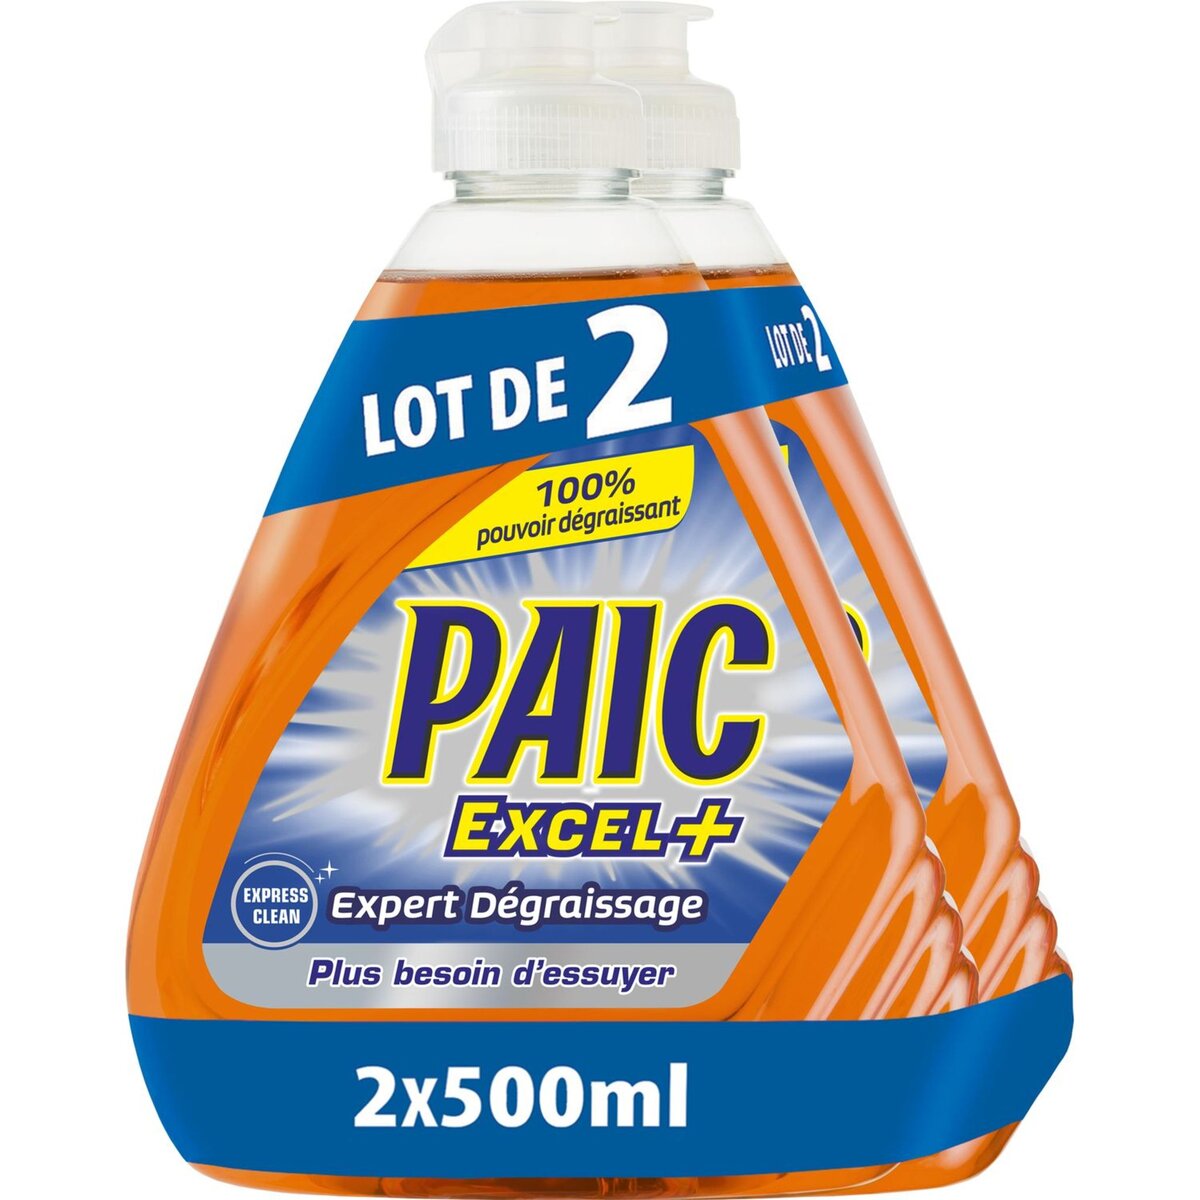 PAIC Liquide vaisselle integral+ expert 750ml 